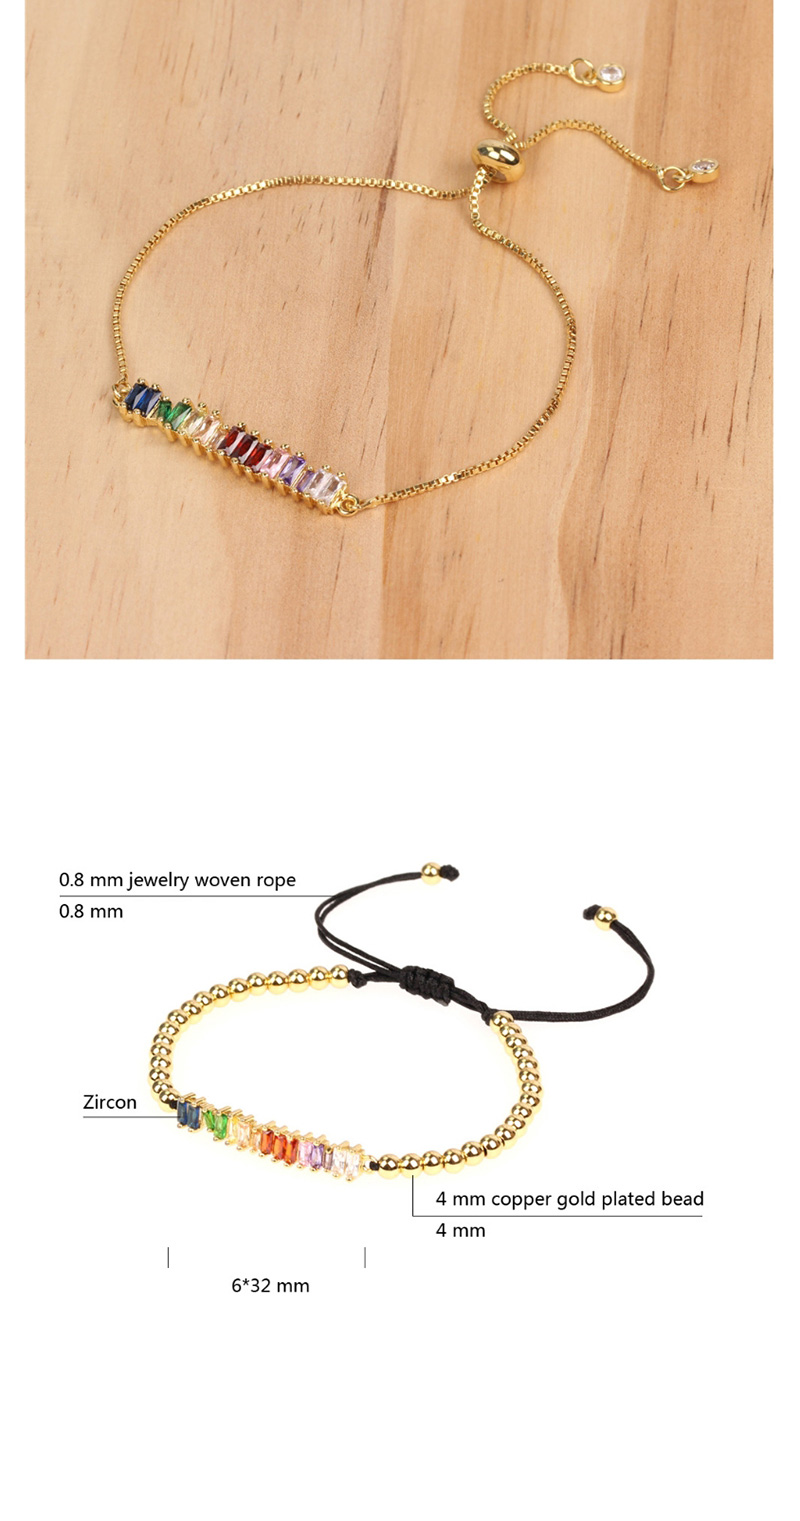 Fashion Golden Adjustable Bracelet With Diamond And Water Crystal Beads,Bracelets